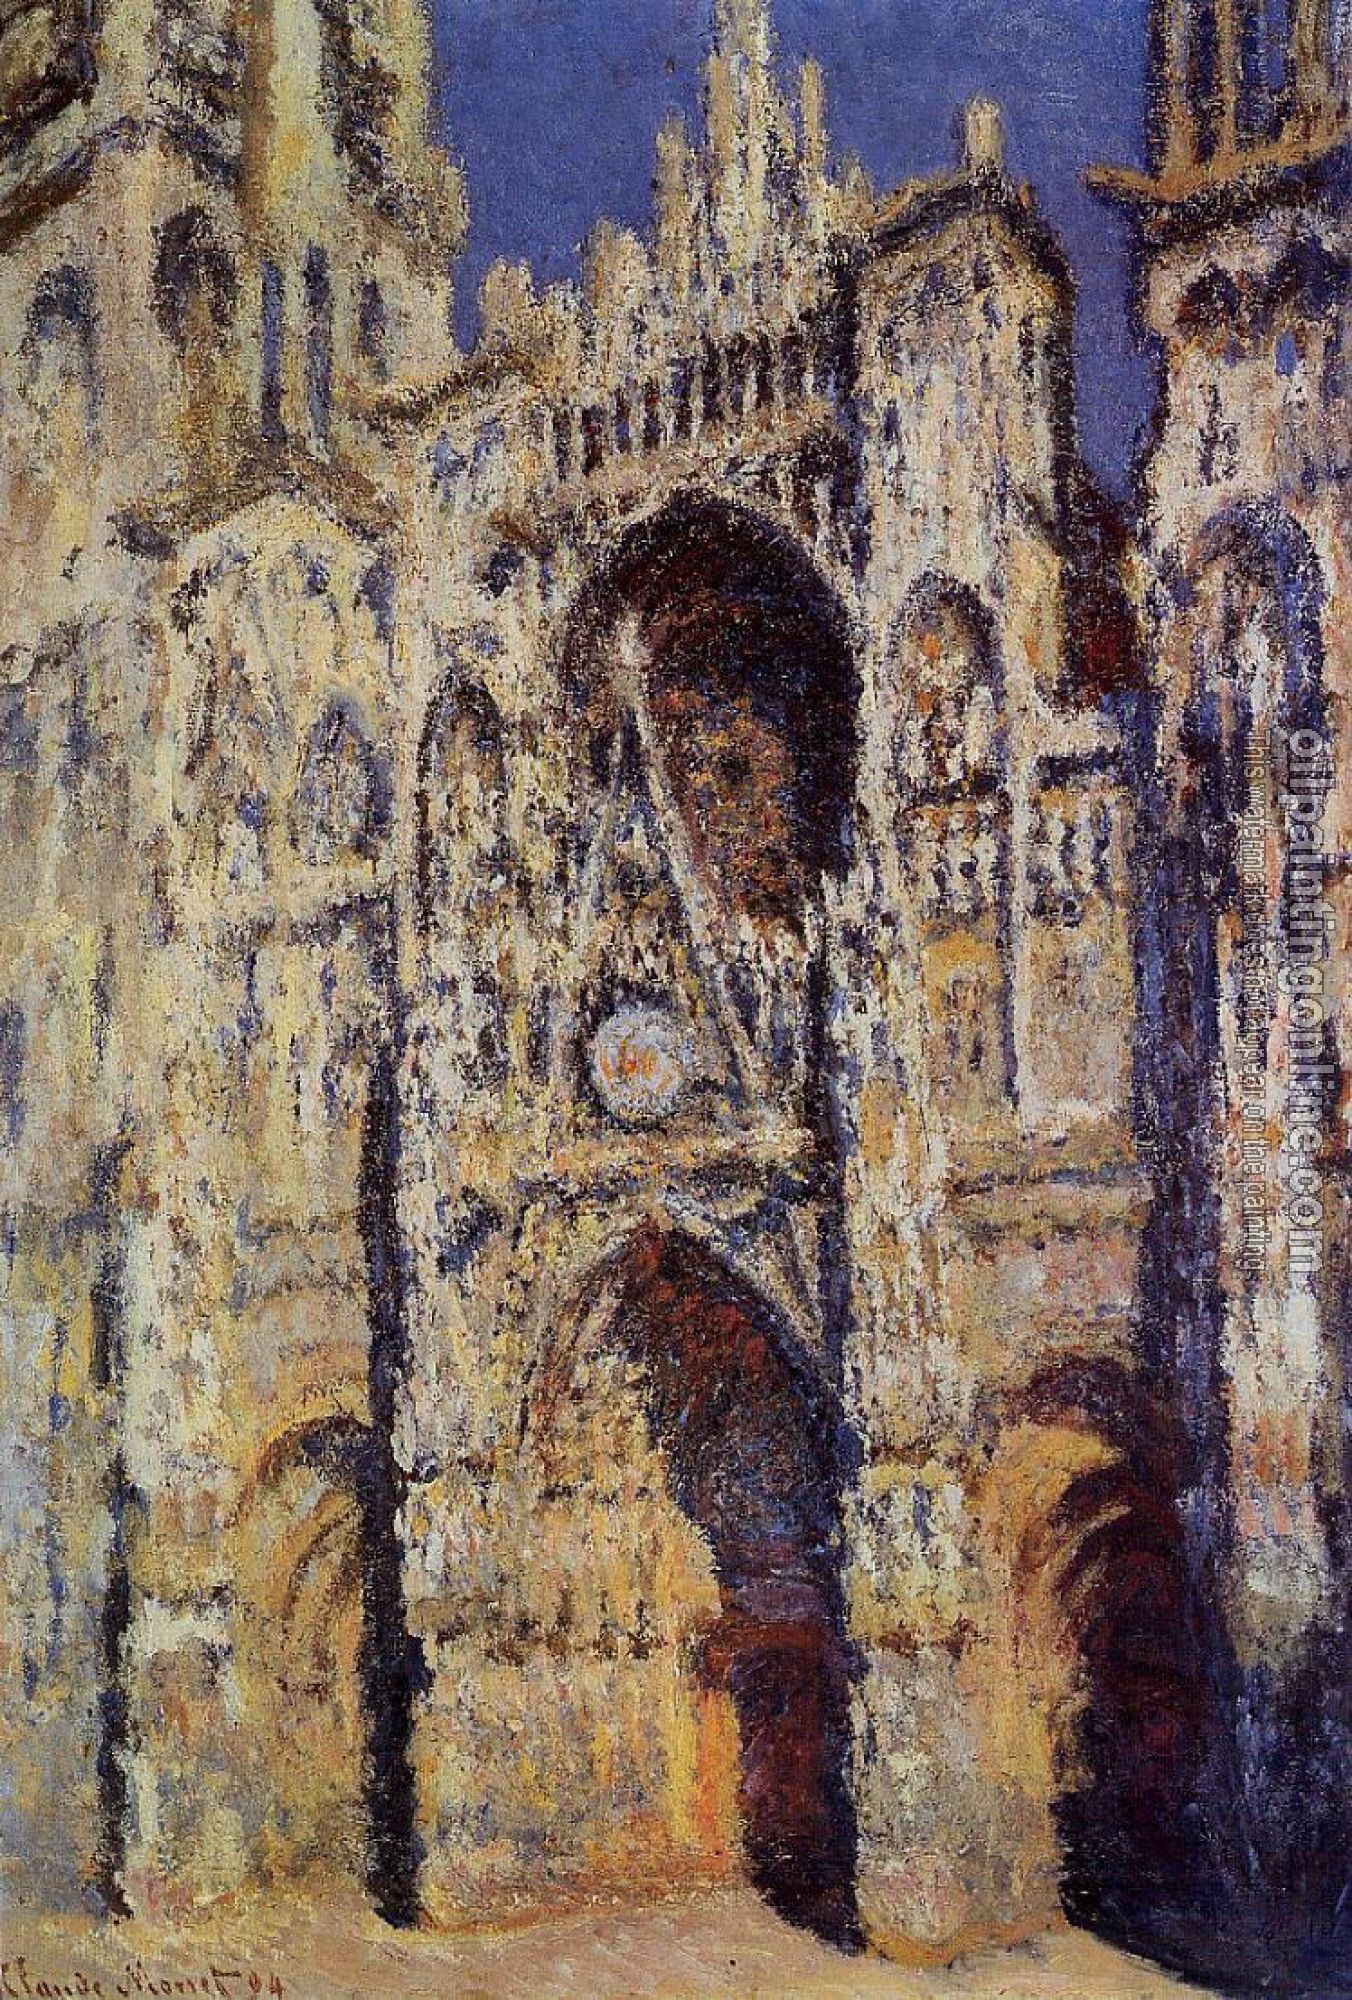 Monet, Claude Oscar - Rouen Cathedral, Full Sunlight